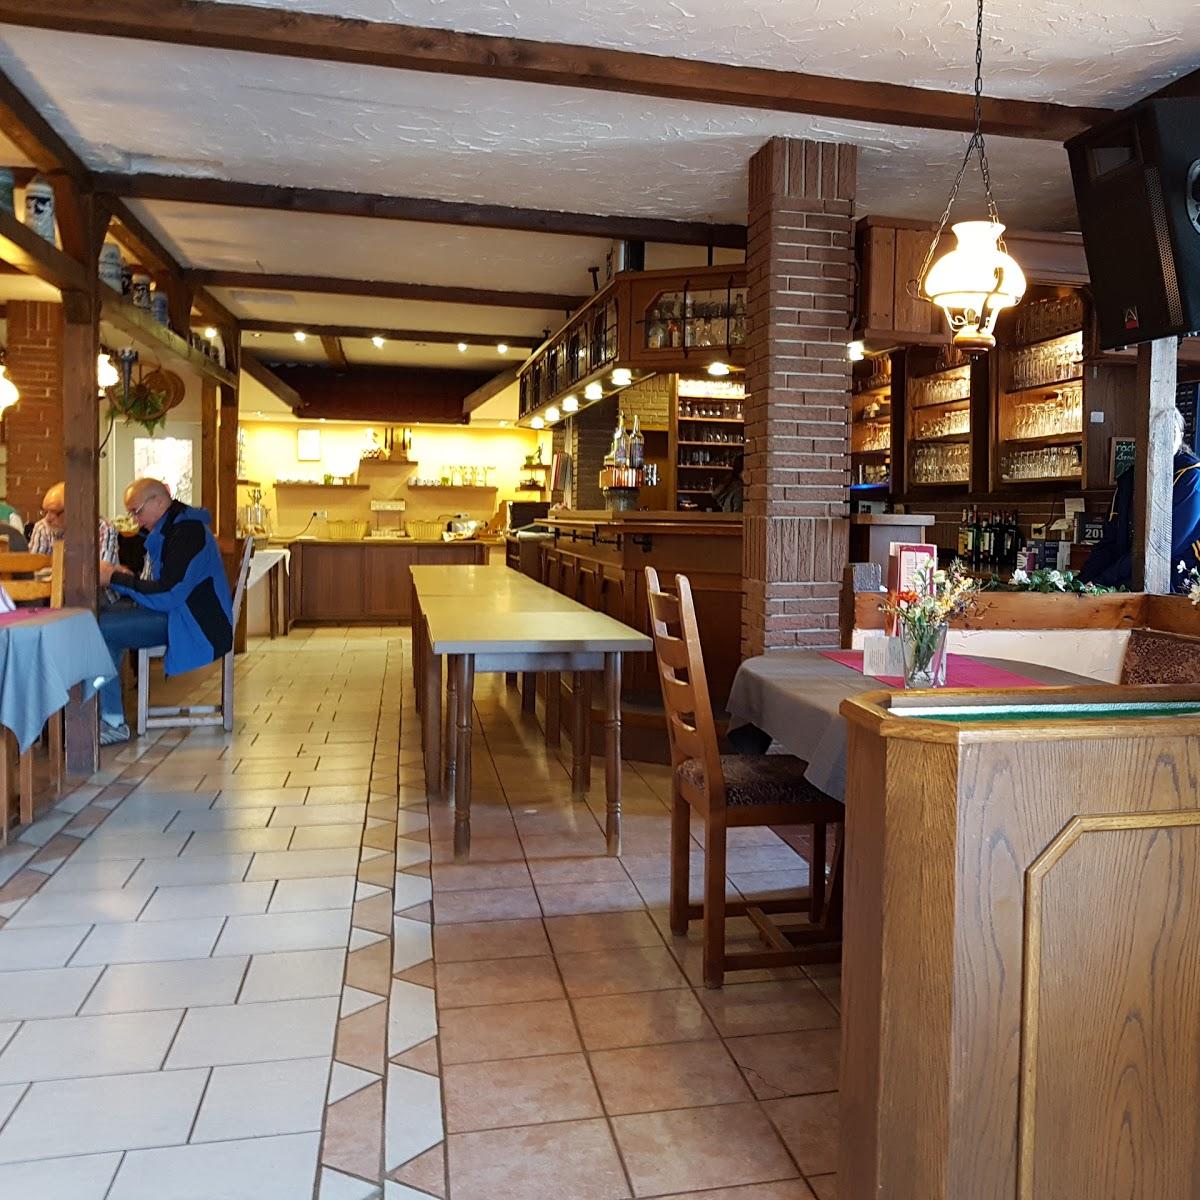 Restaurant "Restaurant Alte Schmiede" in Wangerland